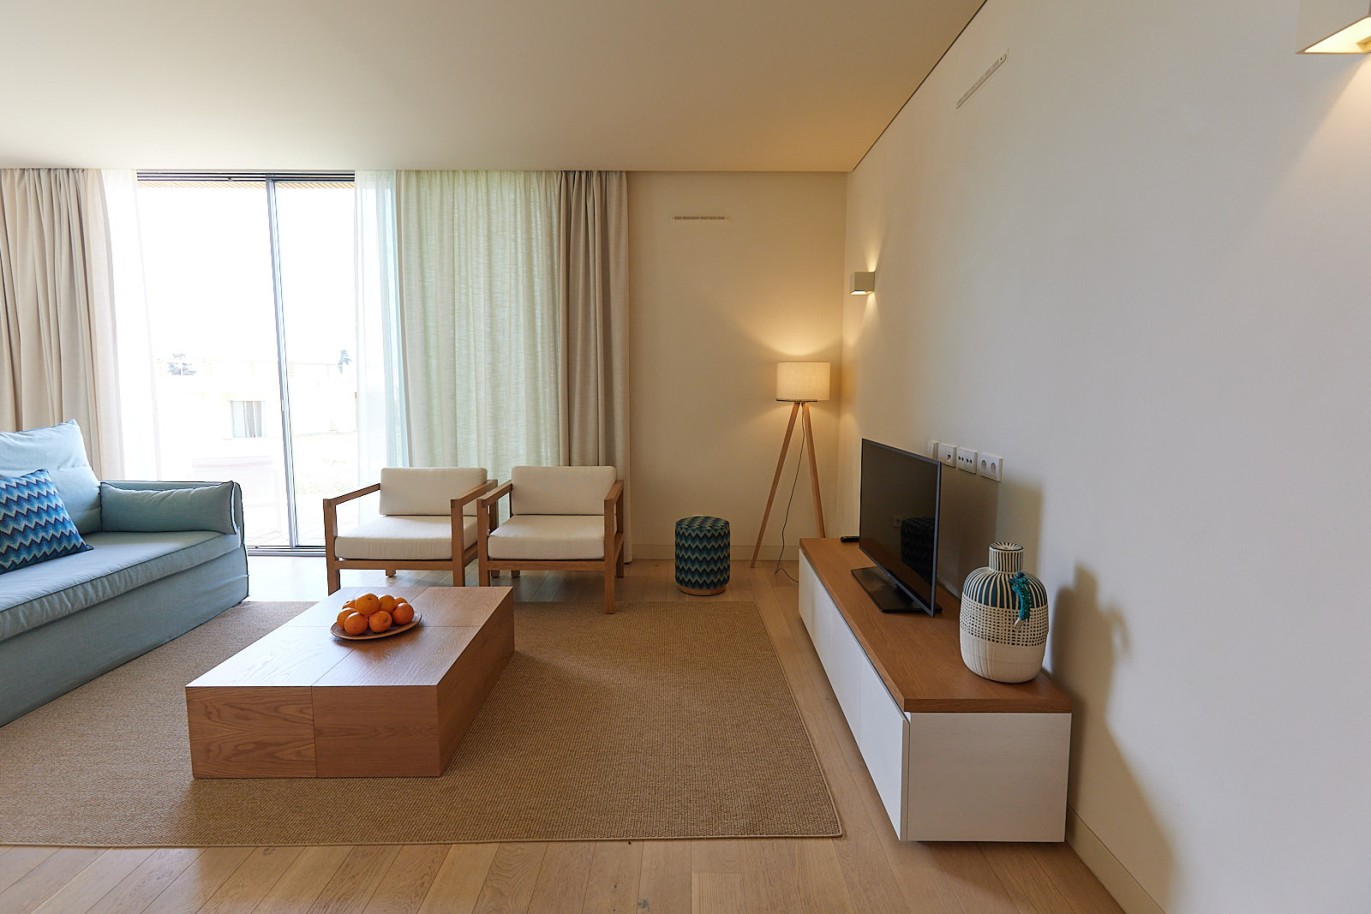 2 bedroom apartment in resort, for sale in Porches, Algarve_229212